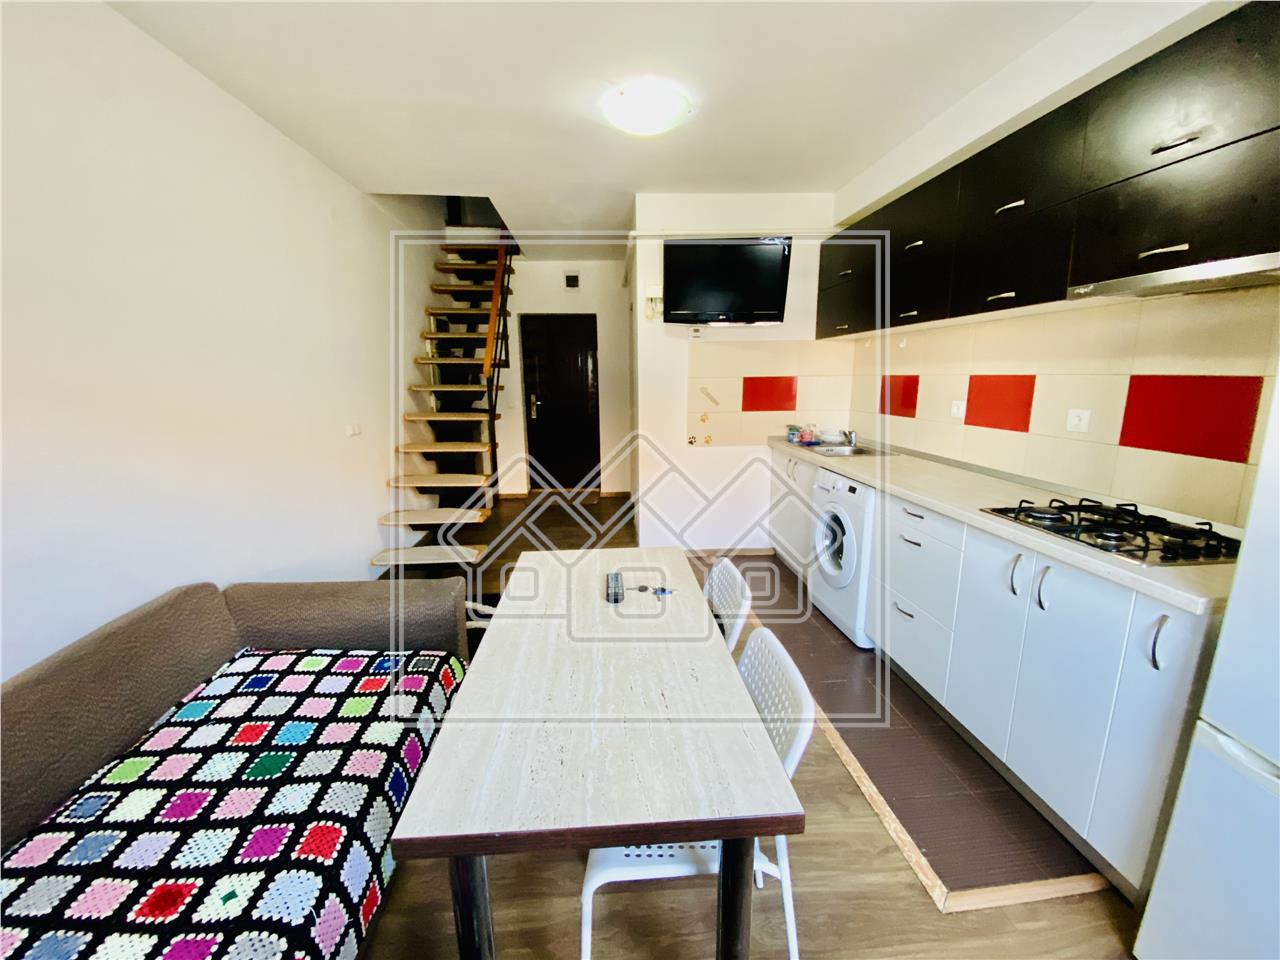 Apartament 3 rooms for sale in Sibiu-Broscarie area